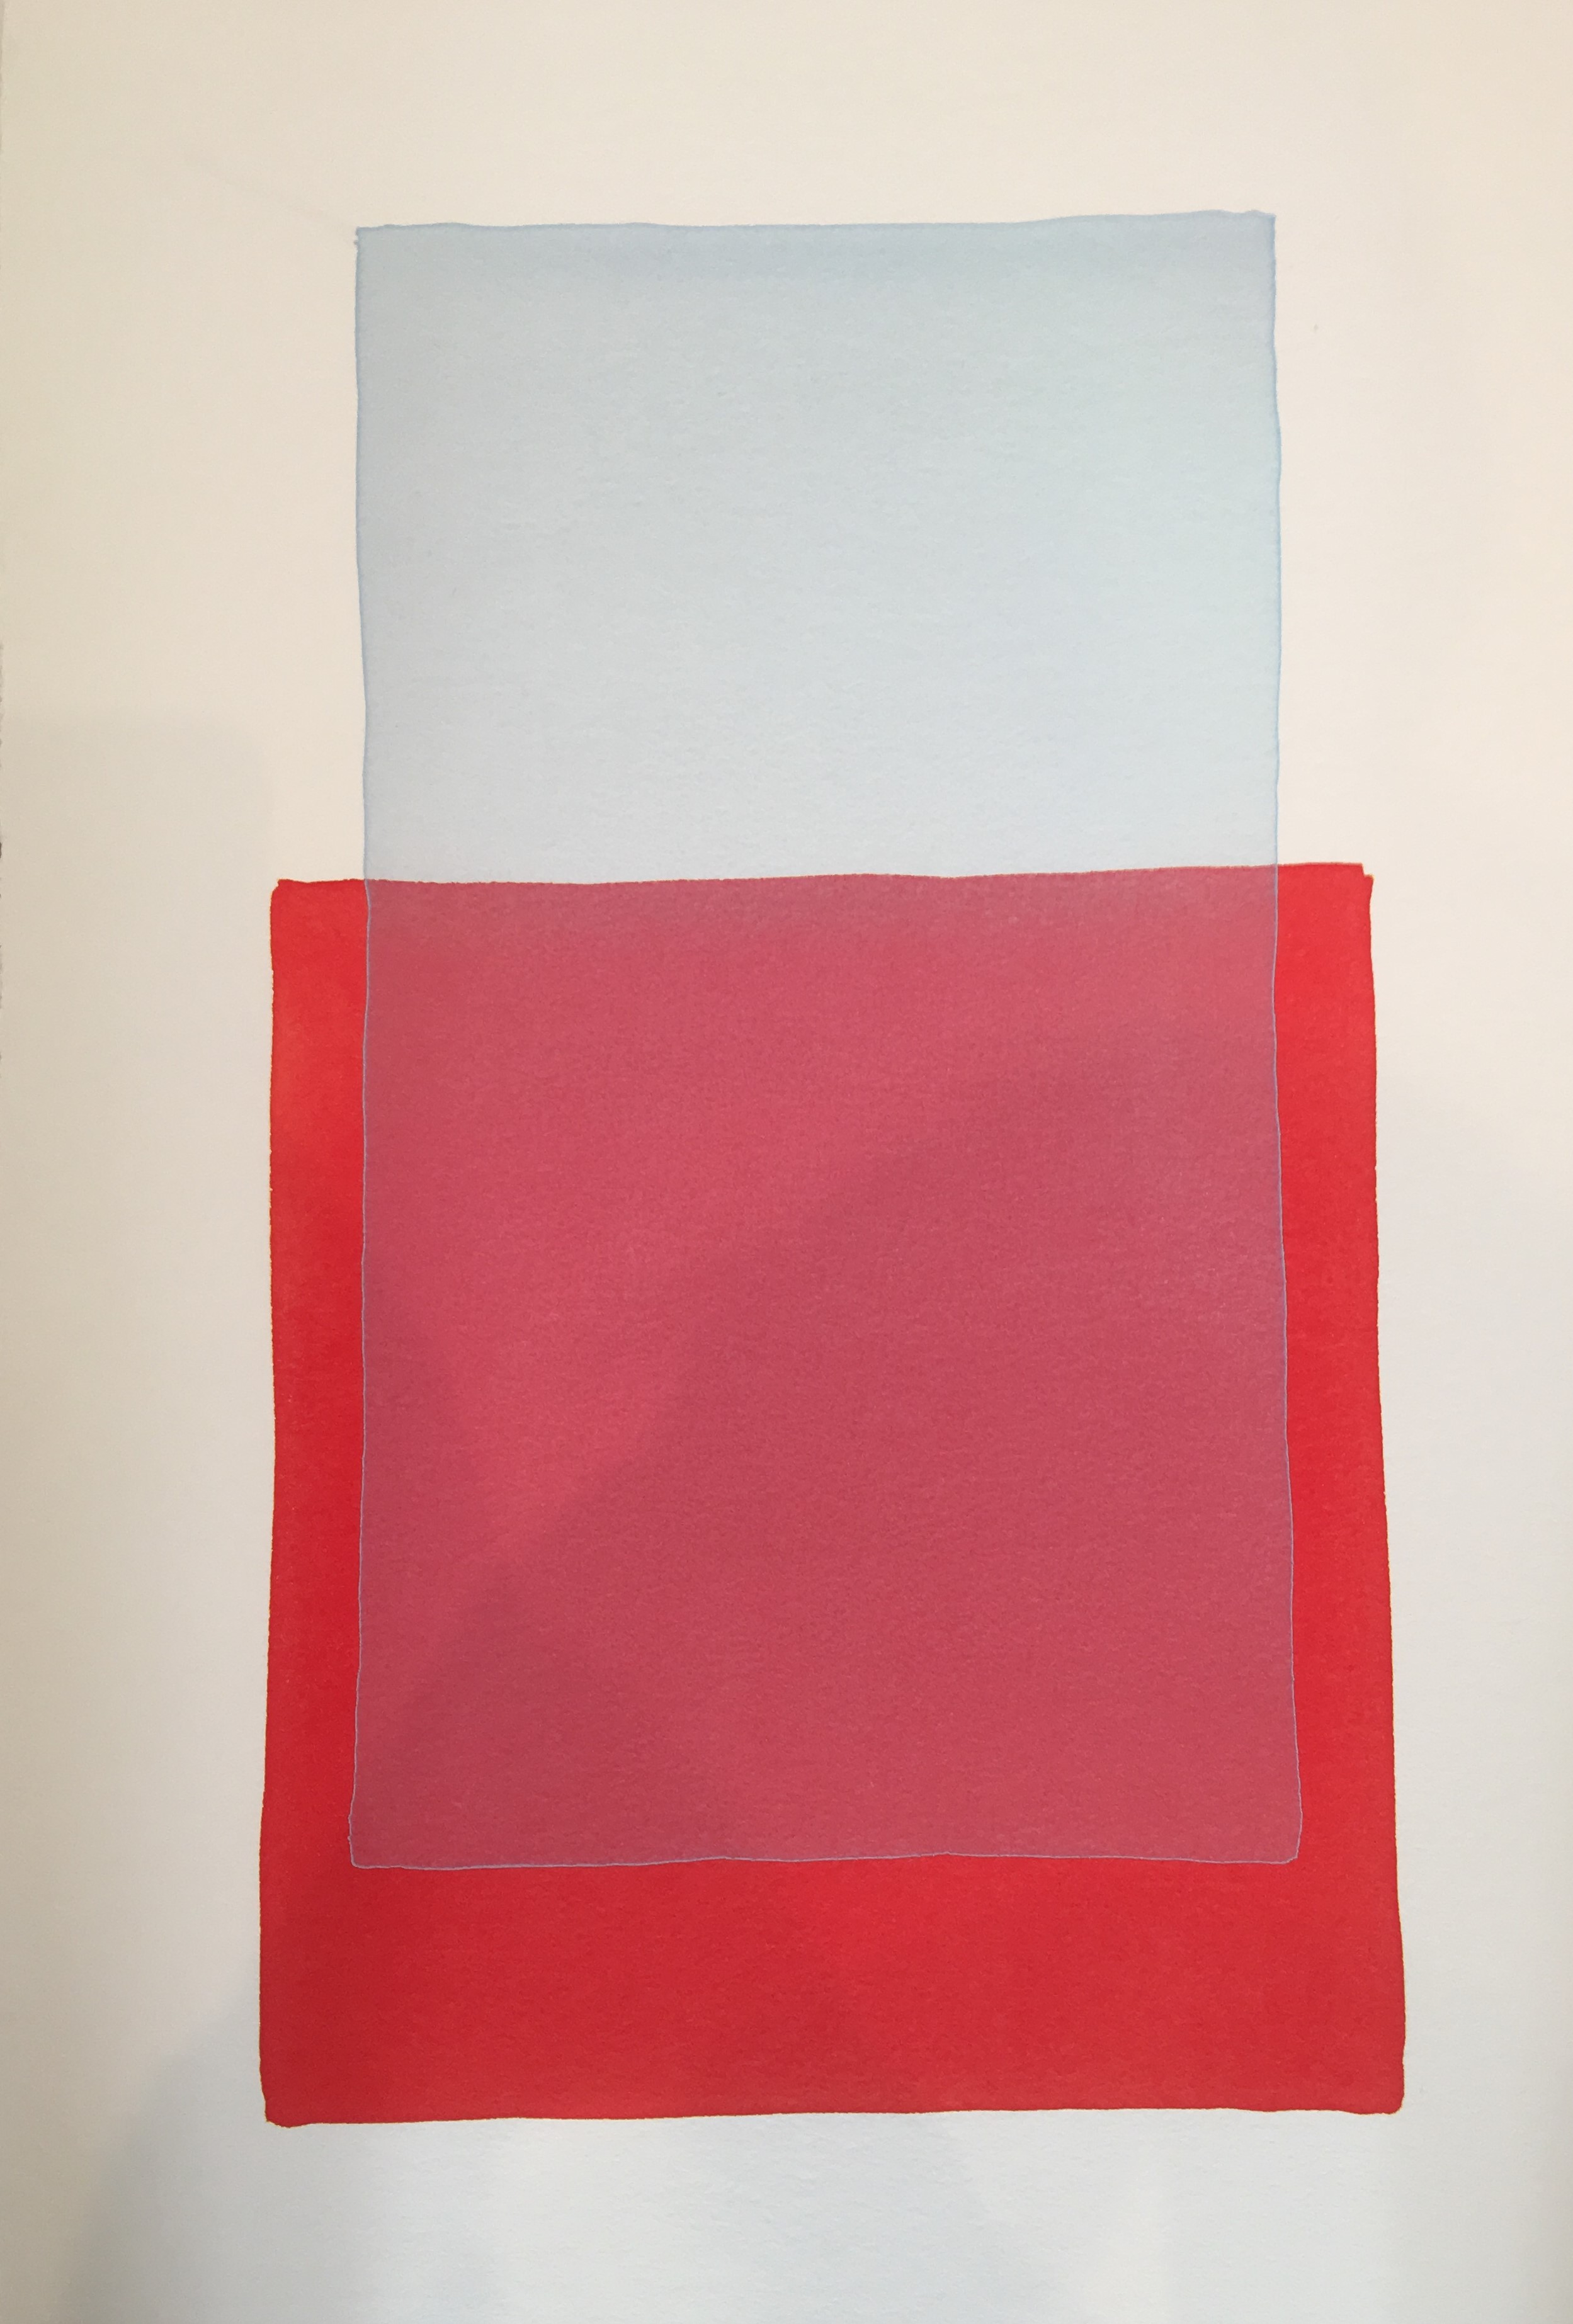 Werner Maier, "Farbräume", 2018, Aquarell auf Büttenpapier, 57 x 38 cm